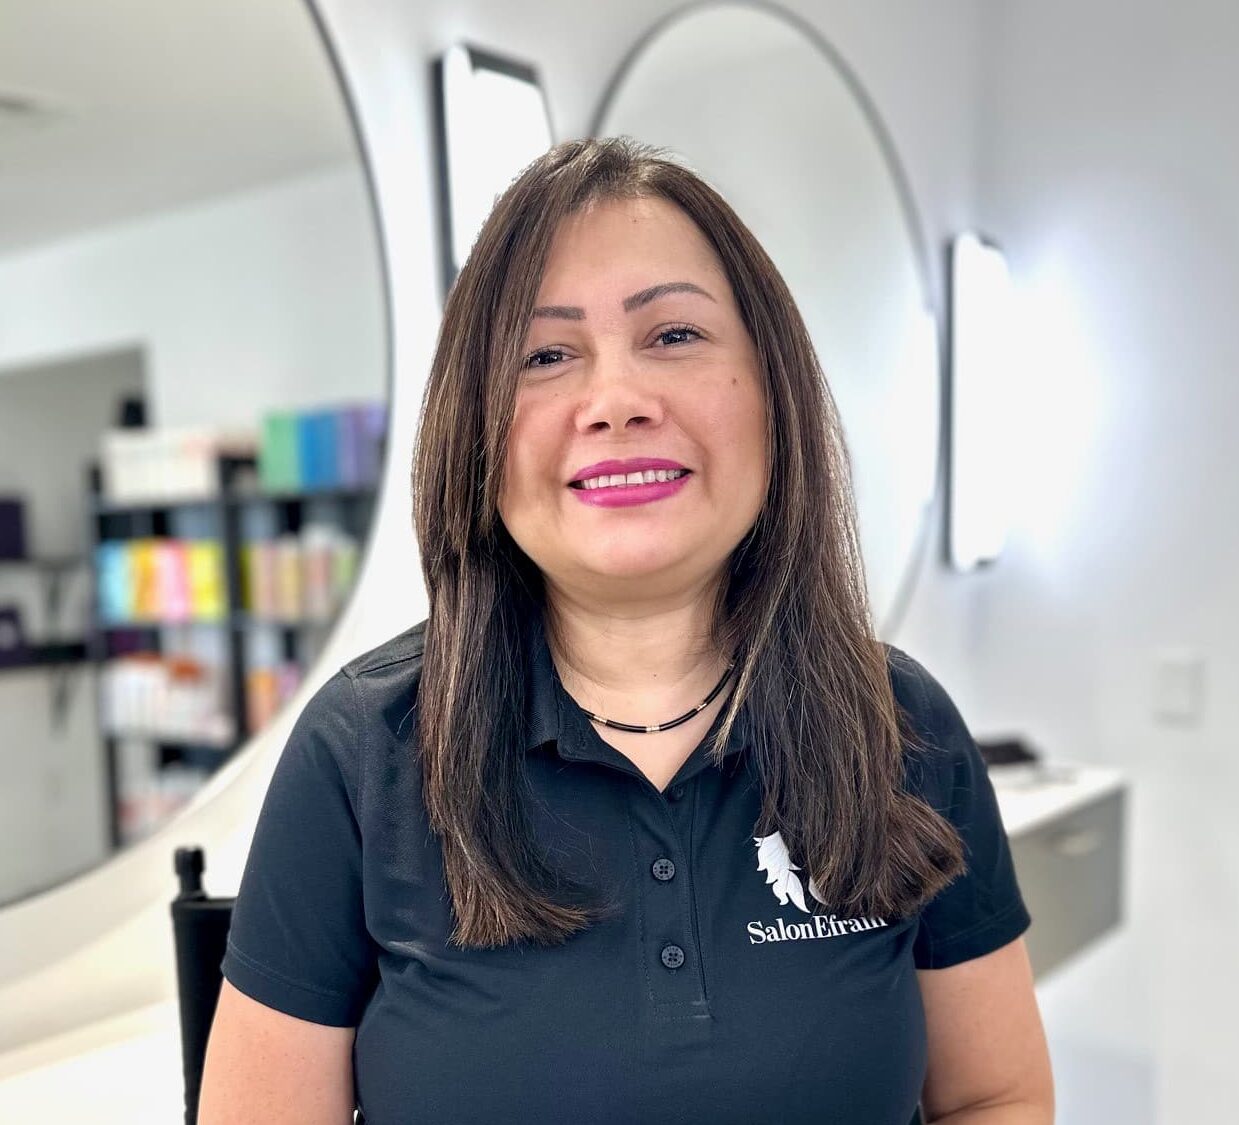 Patricia Pena is a hair stylist at Salon Efrain